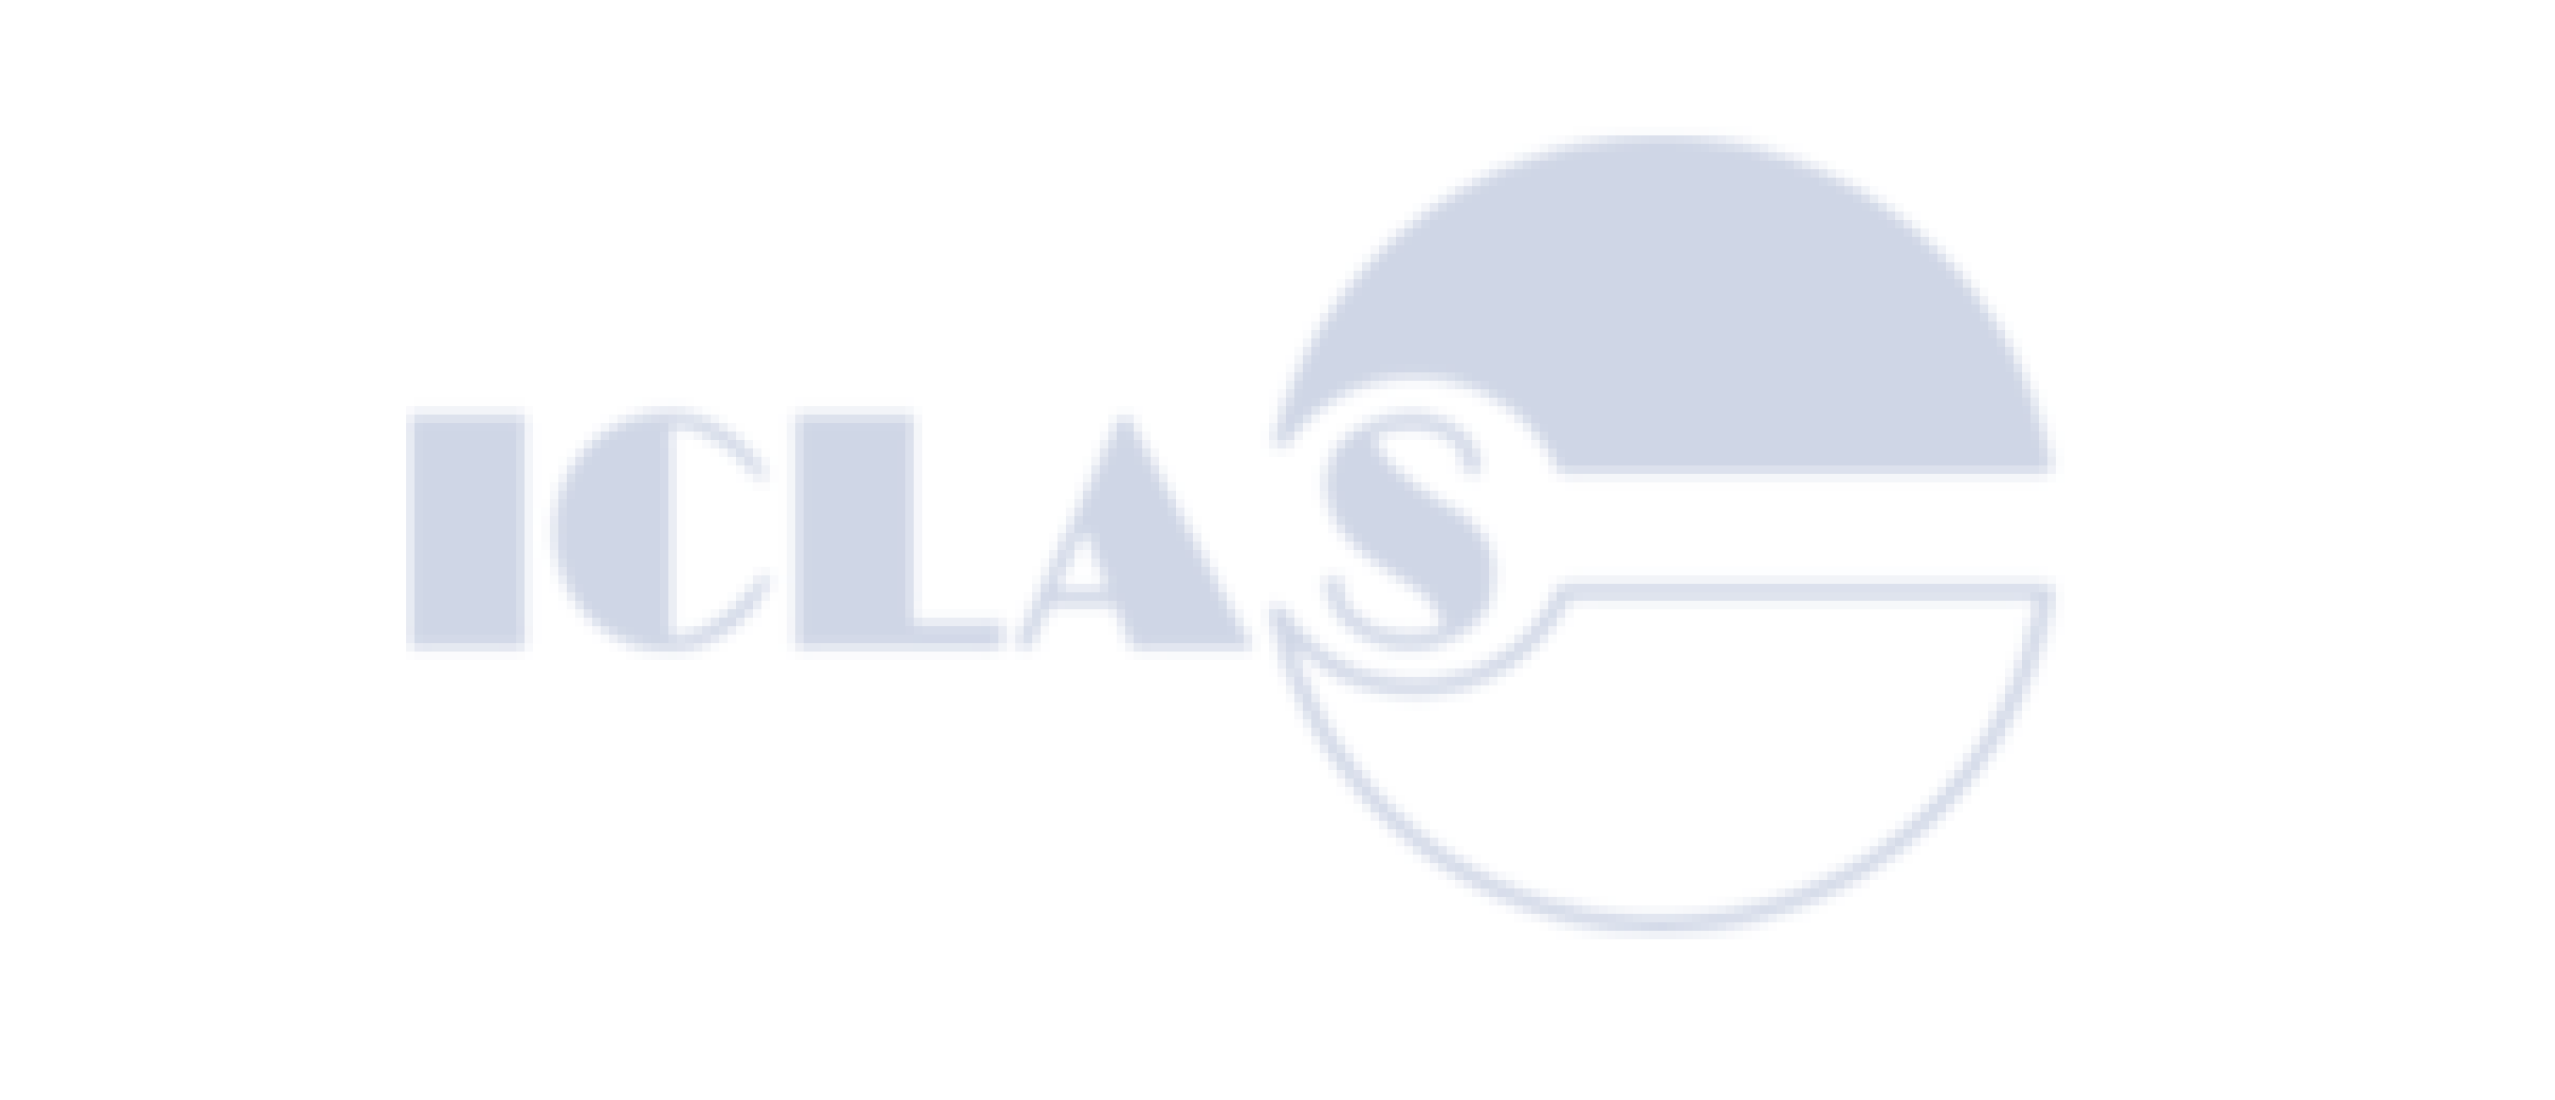 ICLAS News Report September 2022